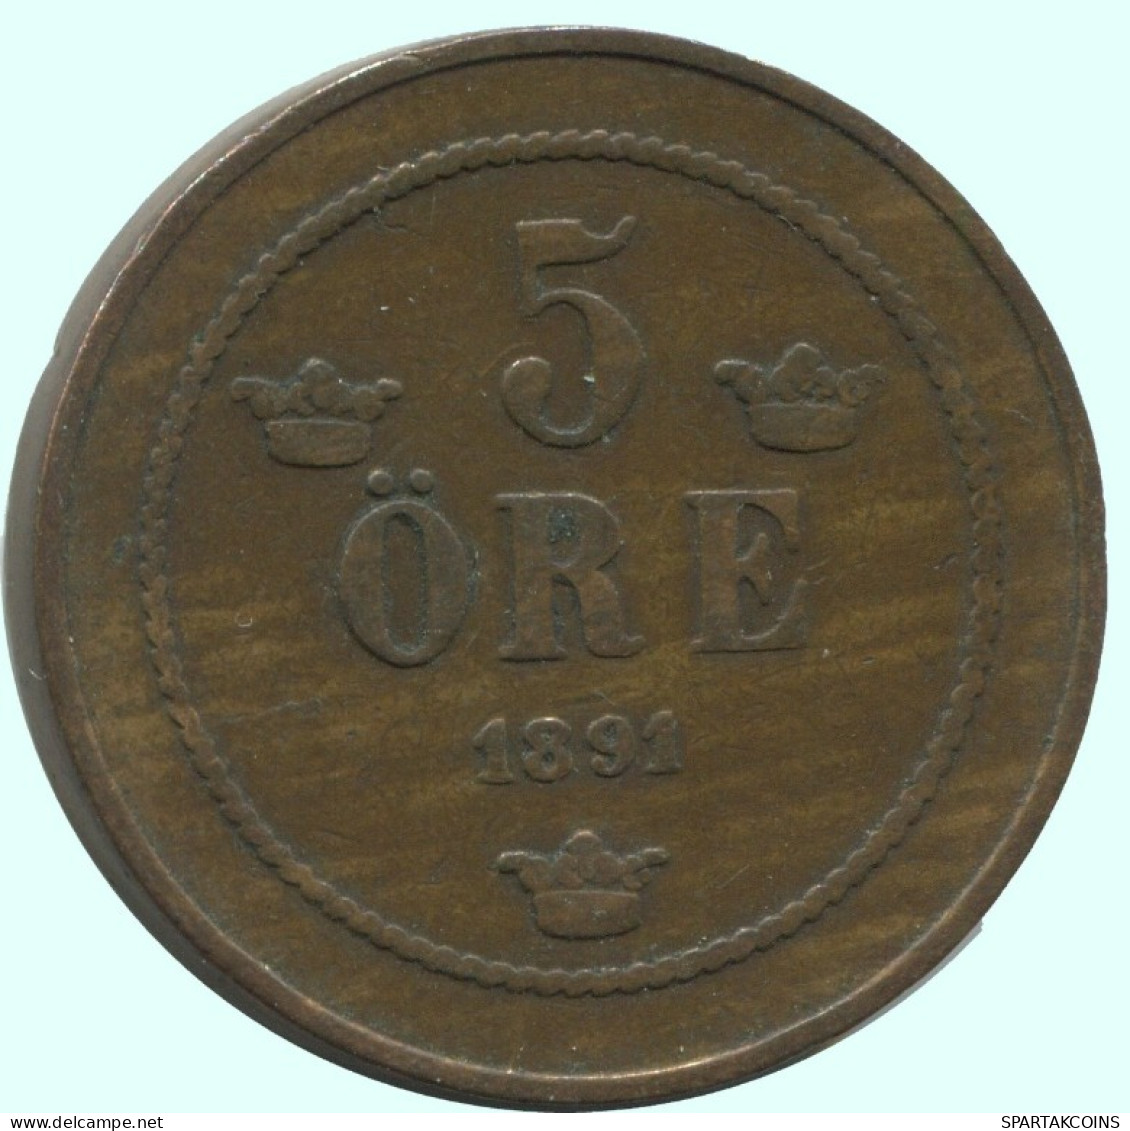 5 ORE 1891 SUECIA SWEDEN Moneda #AC647.2.E.A - Suède